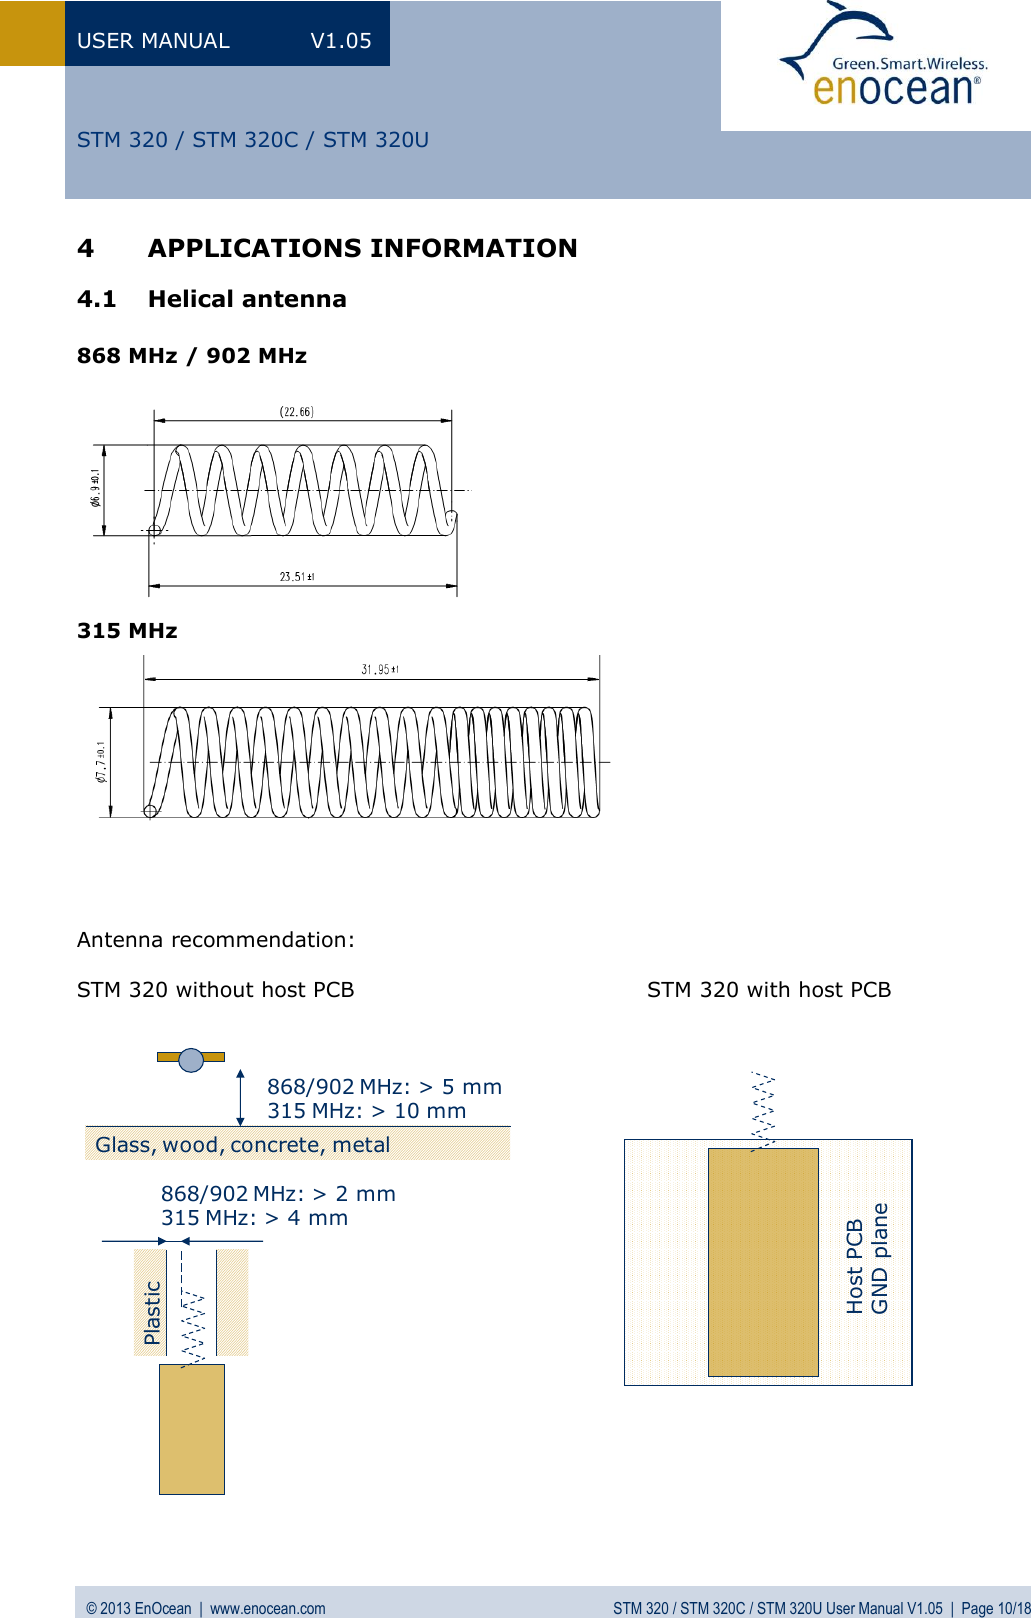 USER MANUAL  V1.05 © 2013 EnOcean  |  www.enocean.com  STM 320 / STM 320C / STM 320U User Manual V1.05  |  Page 10/18   STM 320 / STM 320C / STM 320U 4 APPLICATIONS INFORMATION 4.1 Helical antenna   868 MHz / 902 MHz           315 MHz      Antenna recommendation:  STM 320 without host PCB                                        STM 320 with host PCB                    Host PCBGND planeGlass, wood, concrete, metal868/902 MHz: &gt; 2 mm315 MHz: &gt; 4 mm868/902 MHz: &gt; 5 mm315 MHz: &gt; 10 mmPlastic